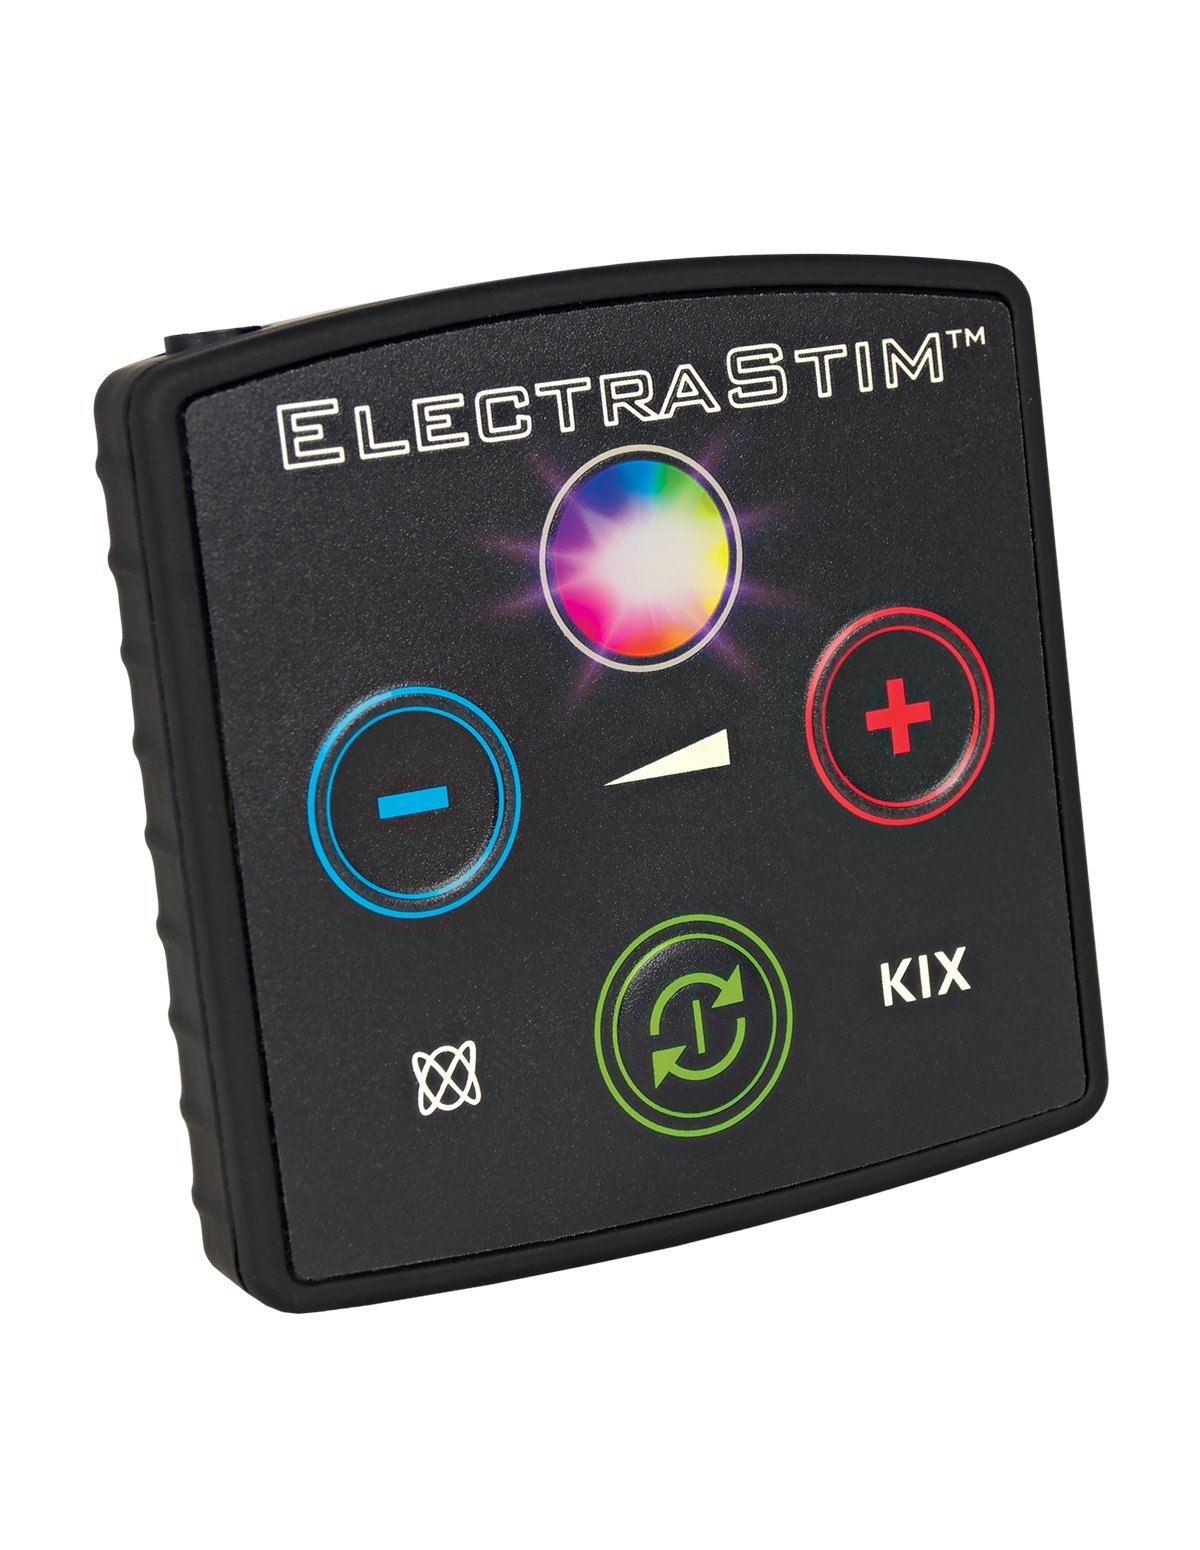 alternate image for Electrastim Kix Electro Sex Stimulator Intro Unit